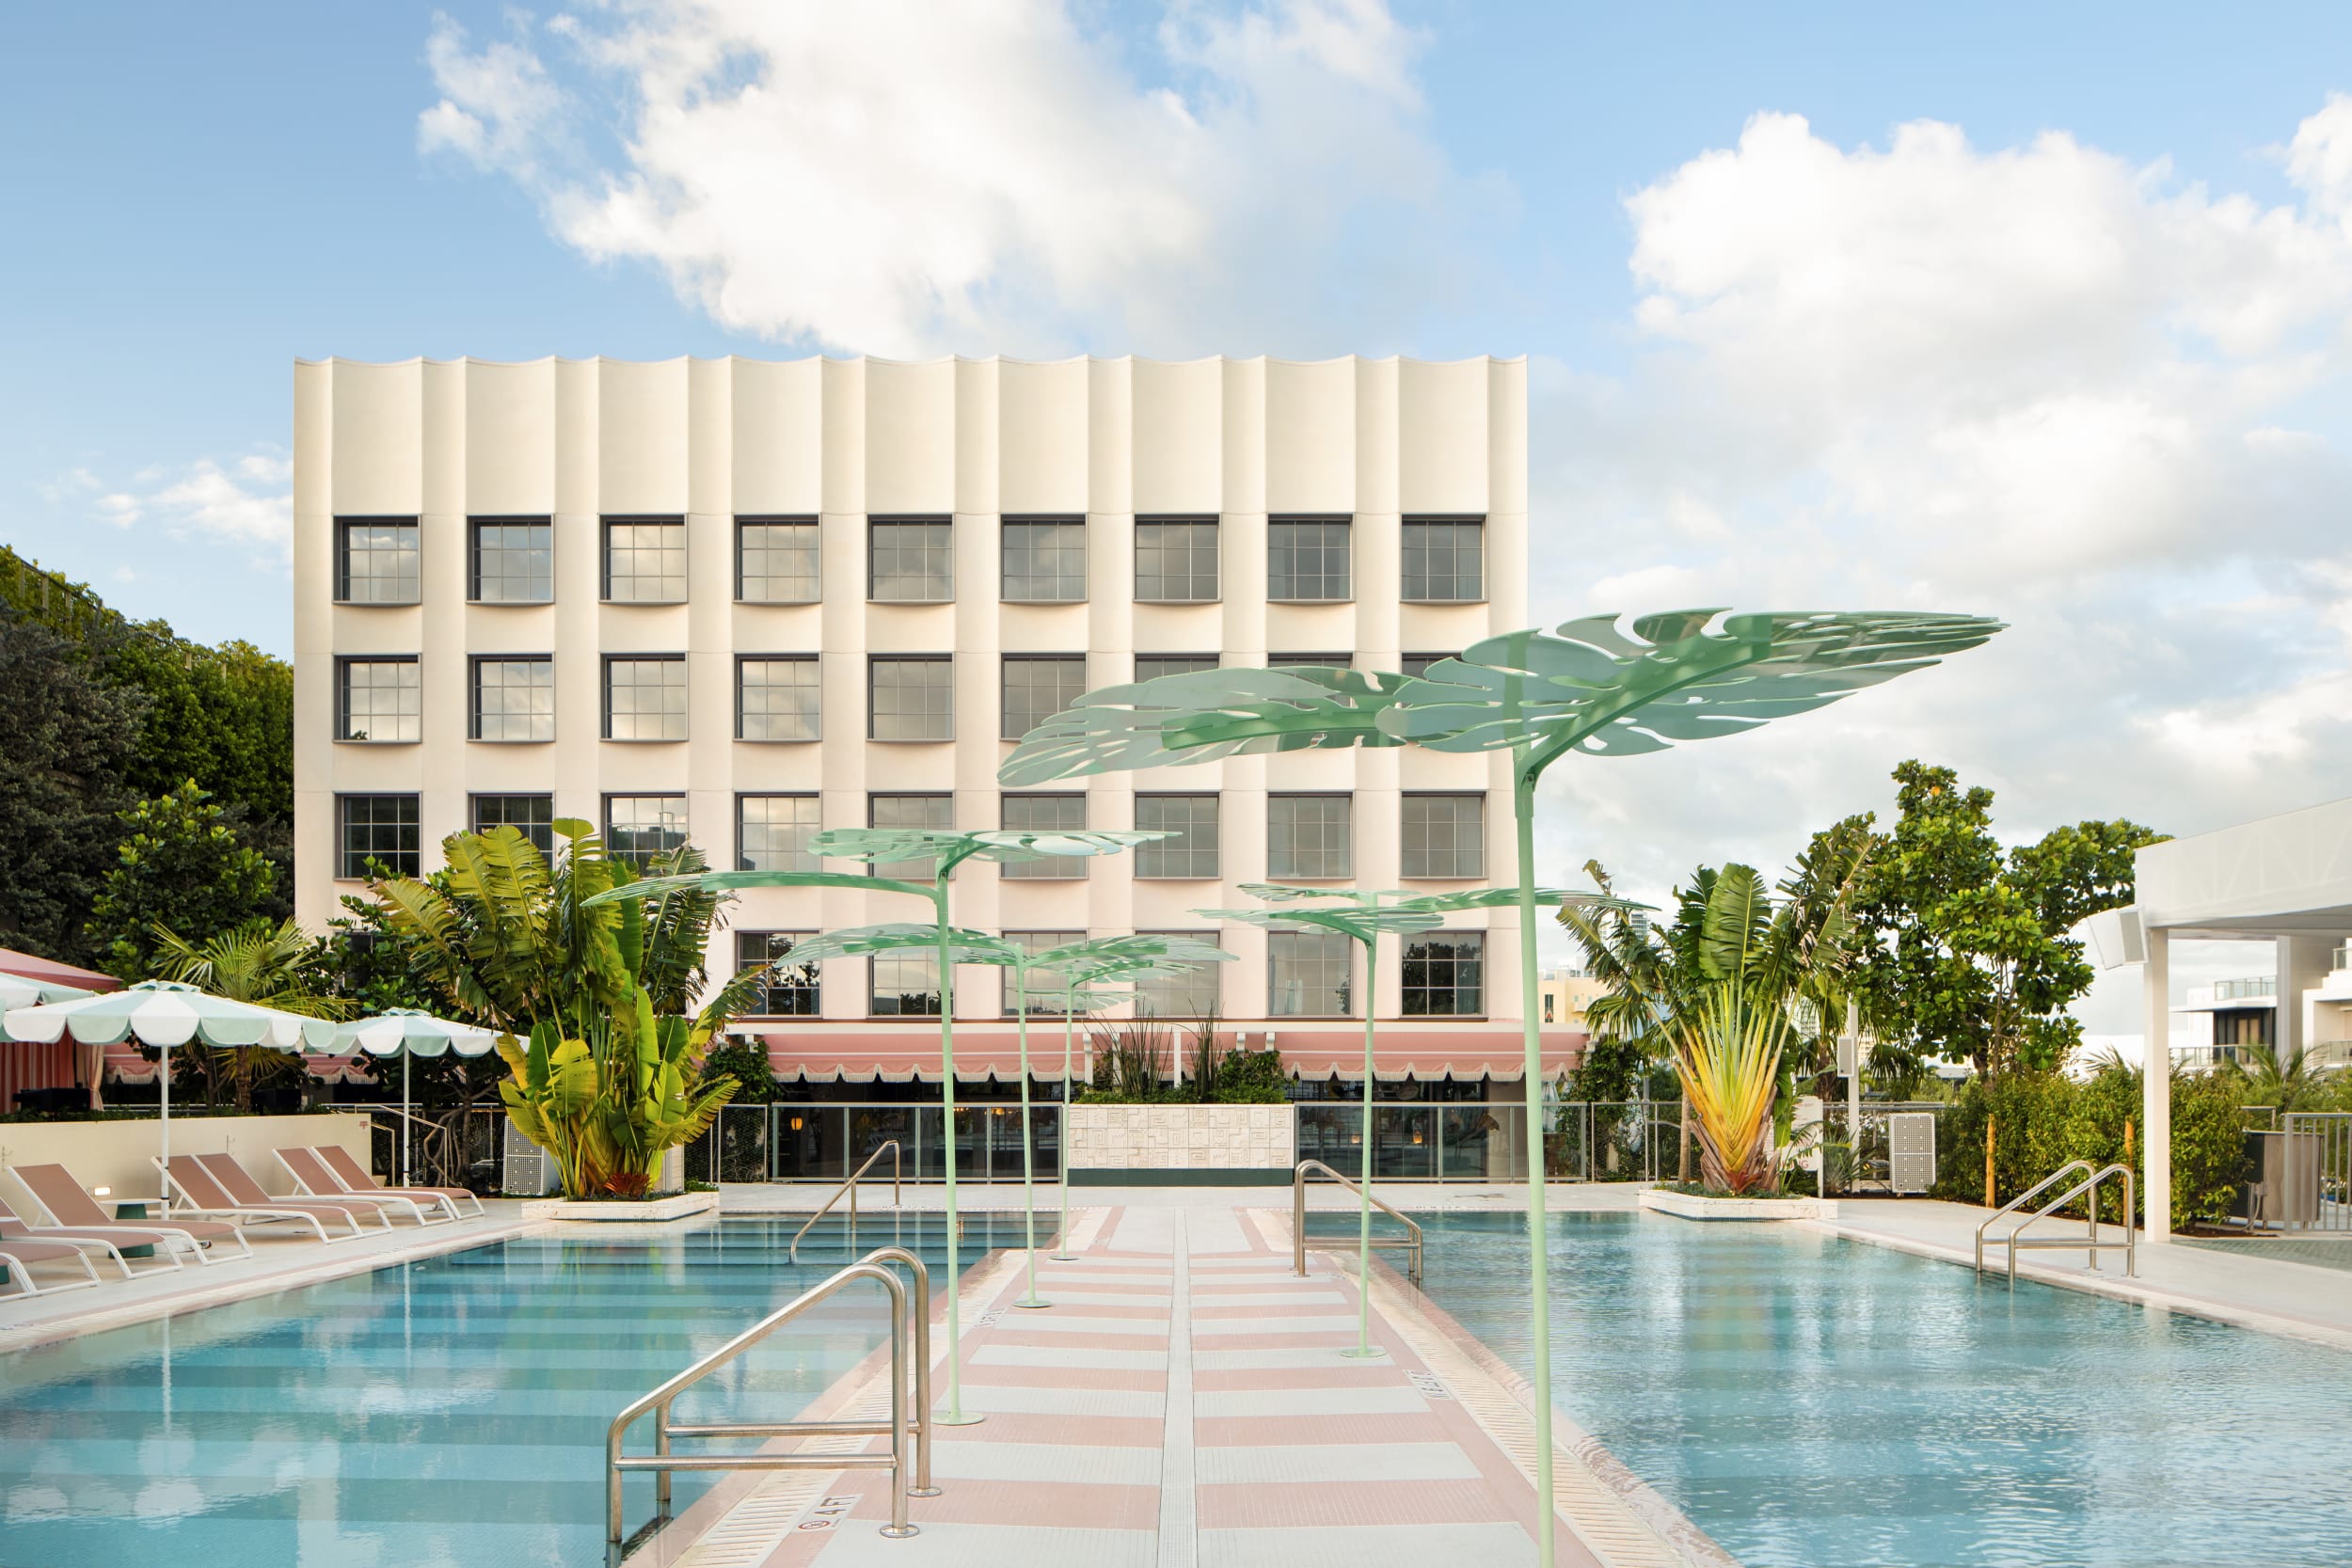 Miami Beach Hotel Pool The Goodtime Hotel Miami